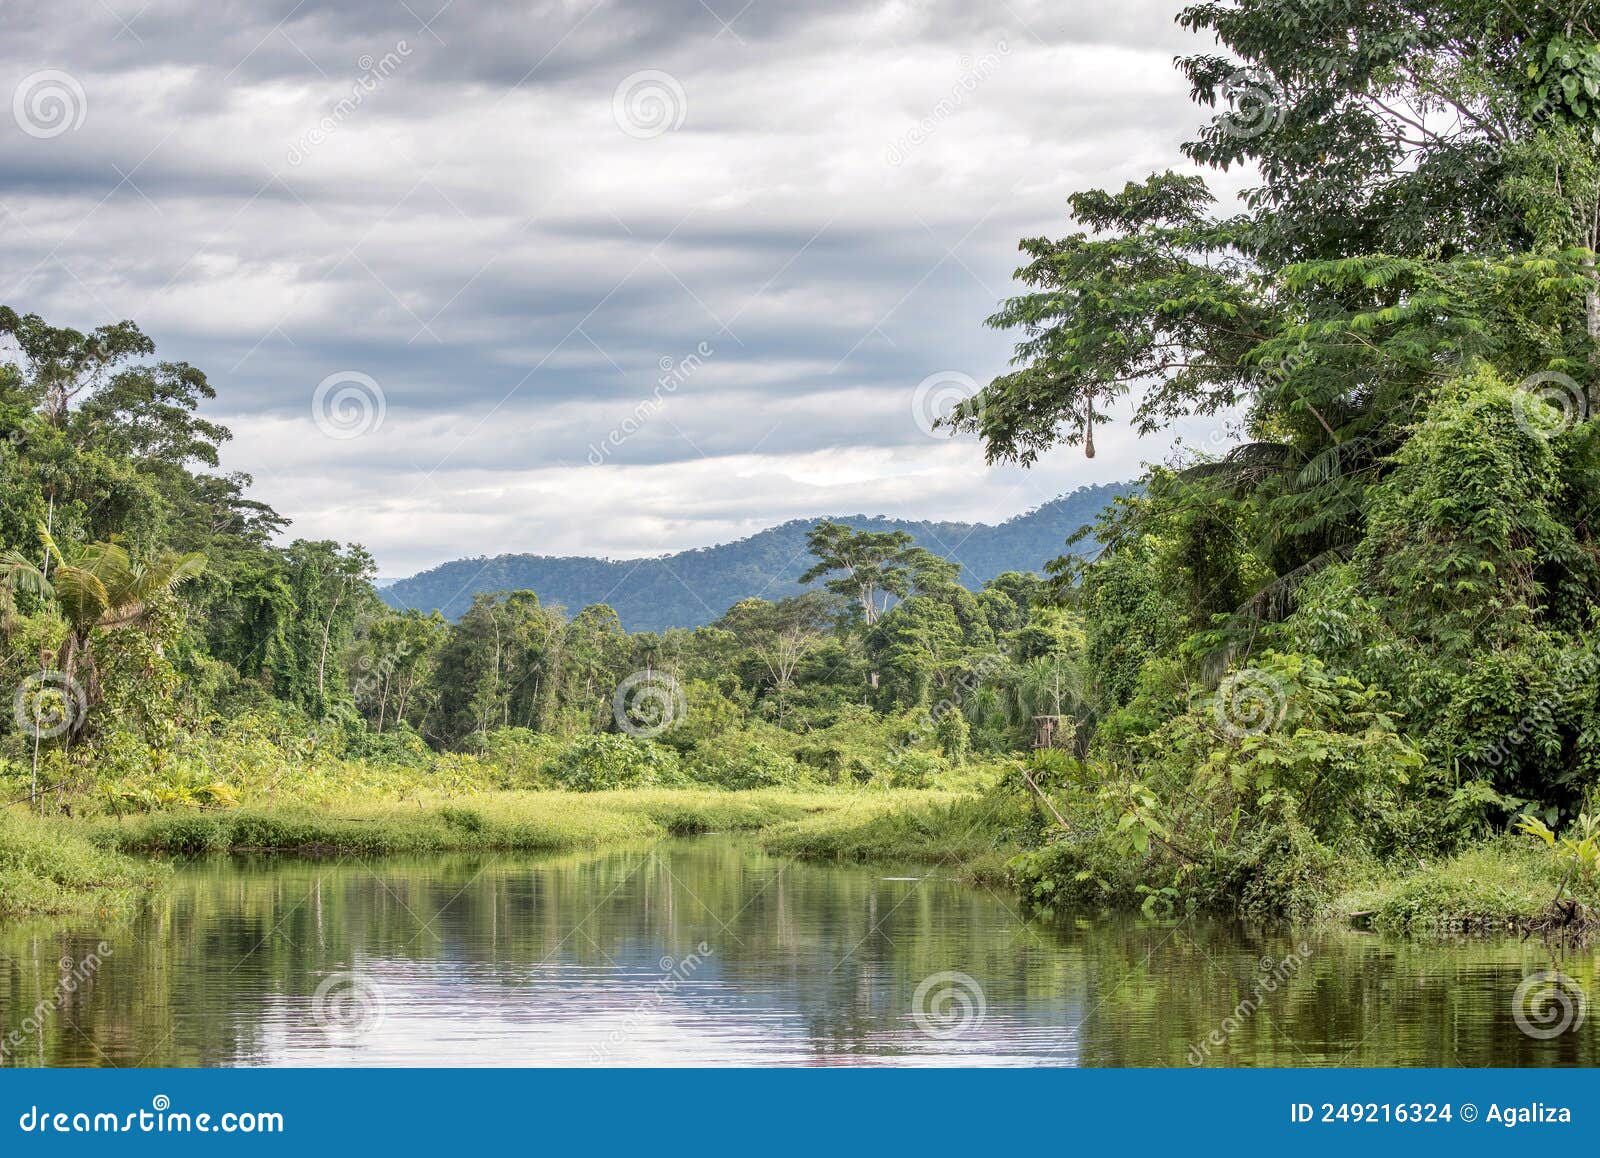 peaceful stream in the amazon rainforest